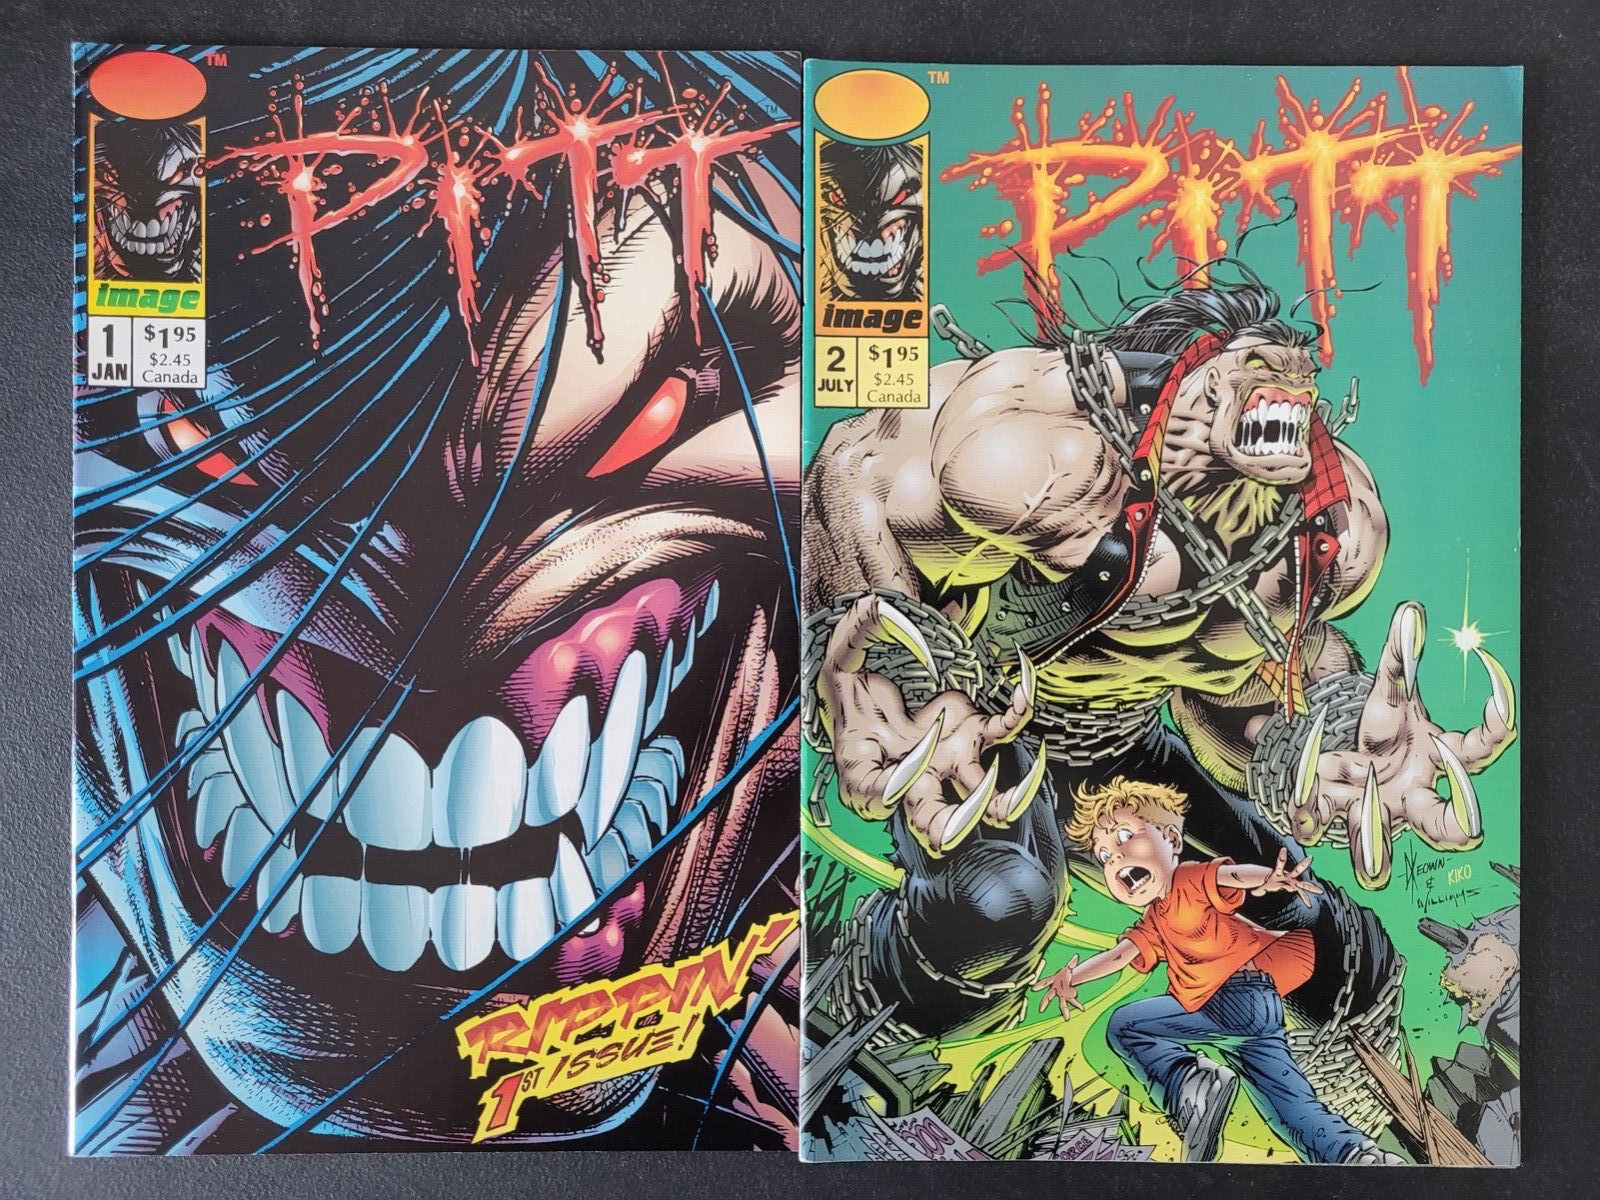 PITT #1 & 2 (1993) IMAGE COMICS FANTASTIC 1ST PRINT DALE KEOWN AMAZING ART